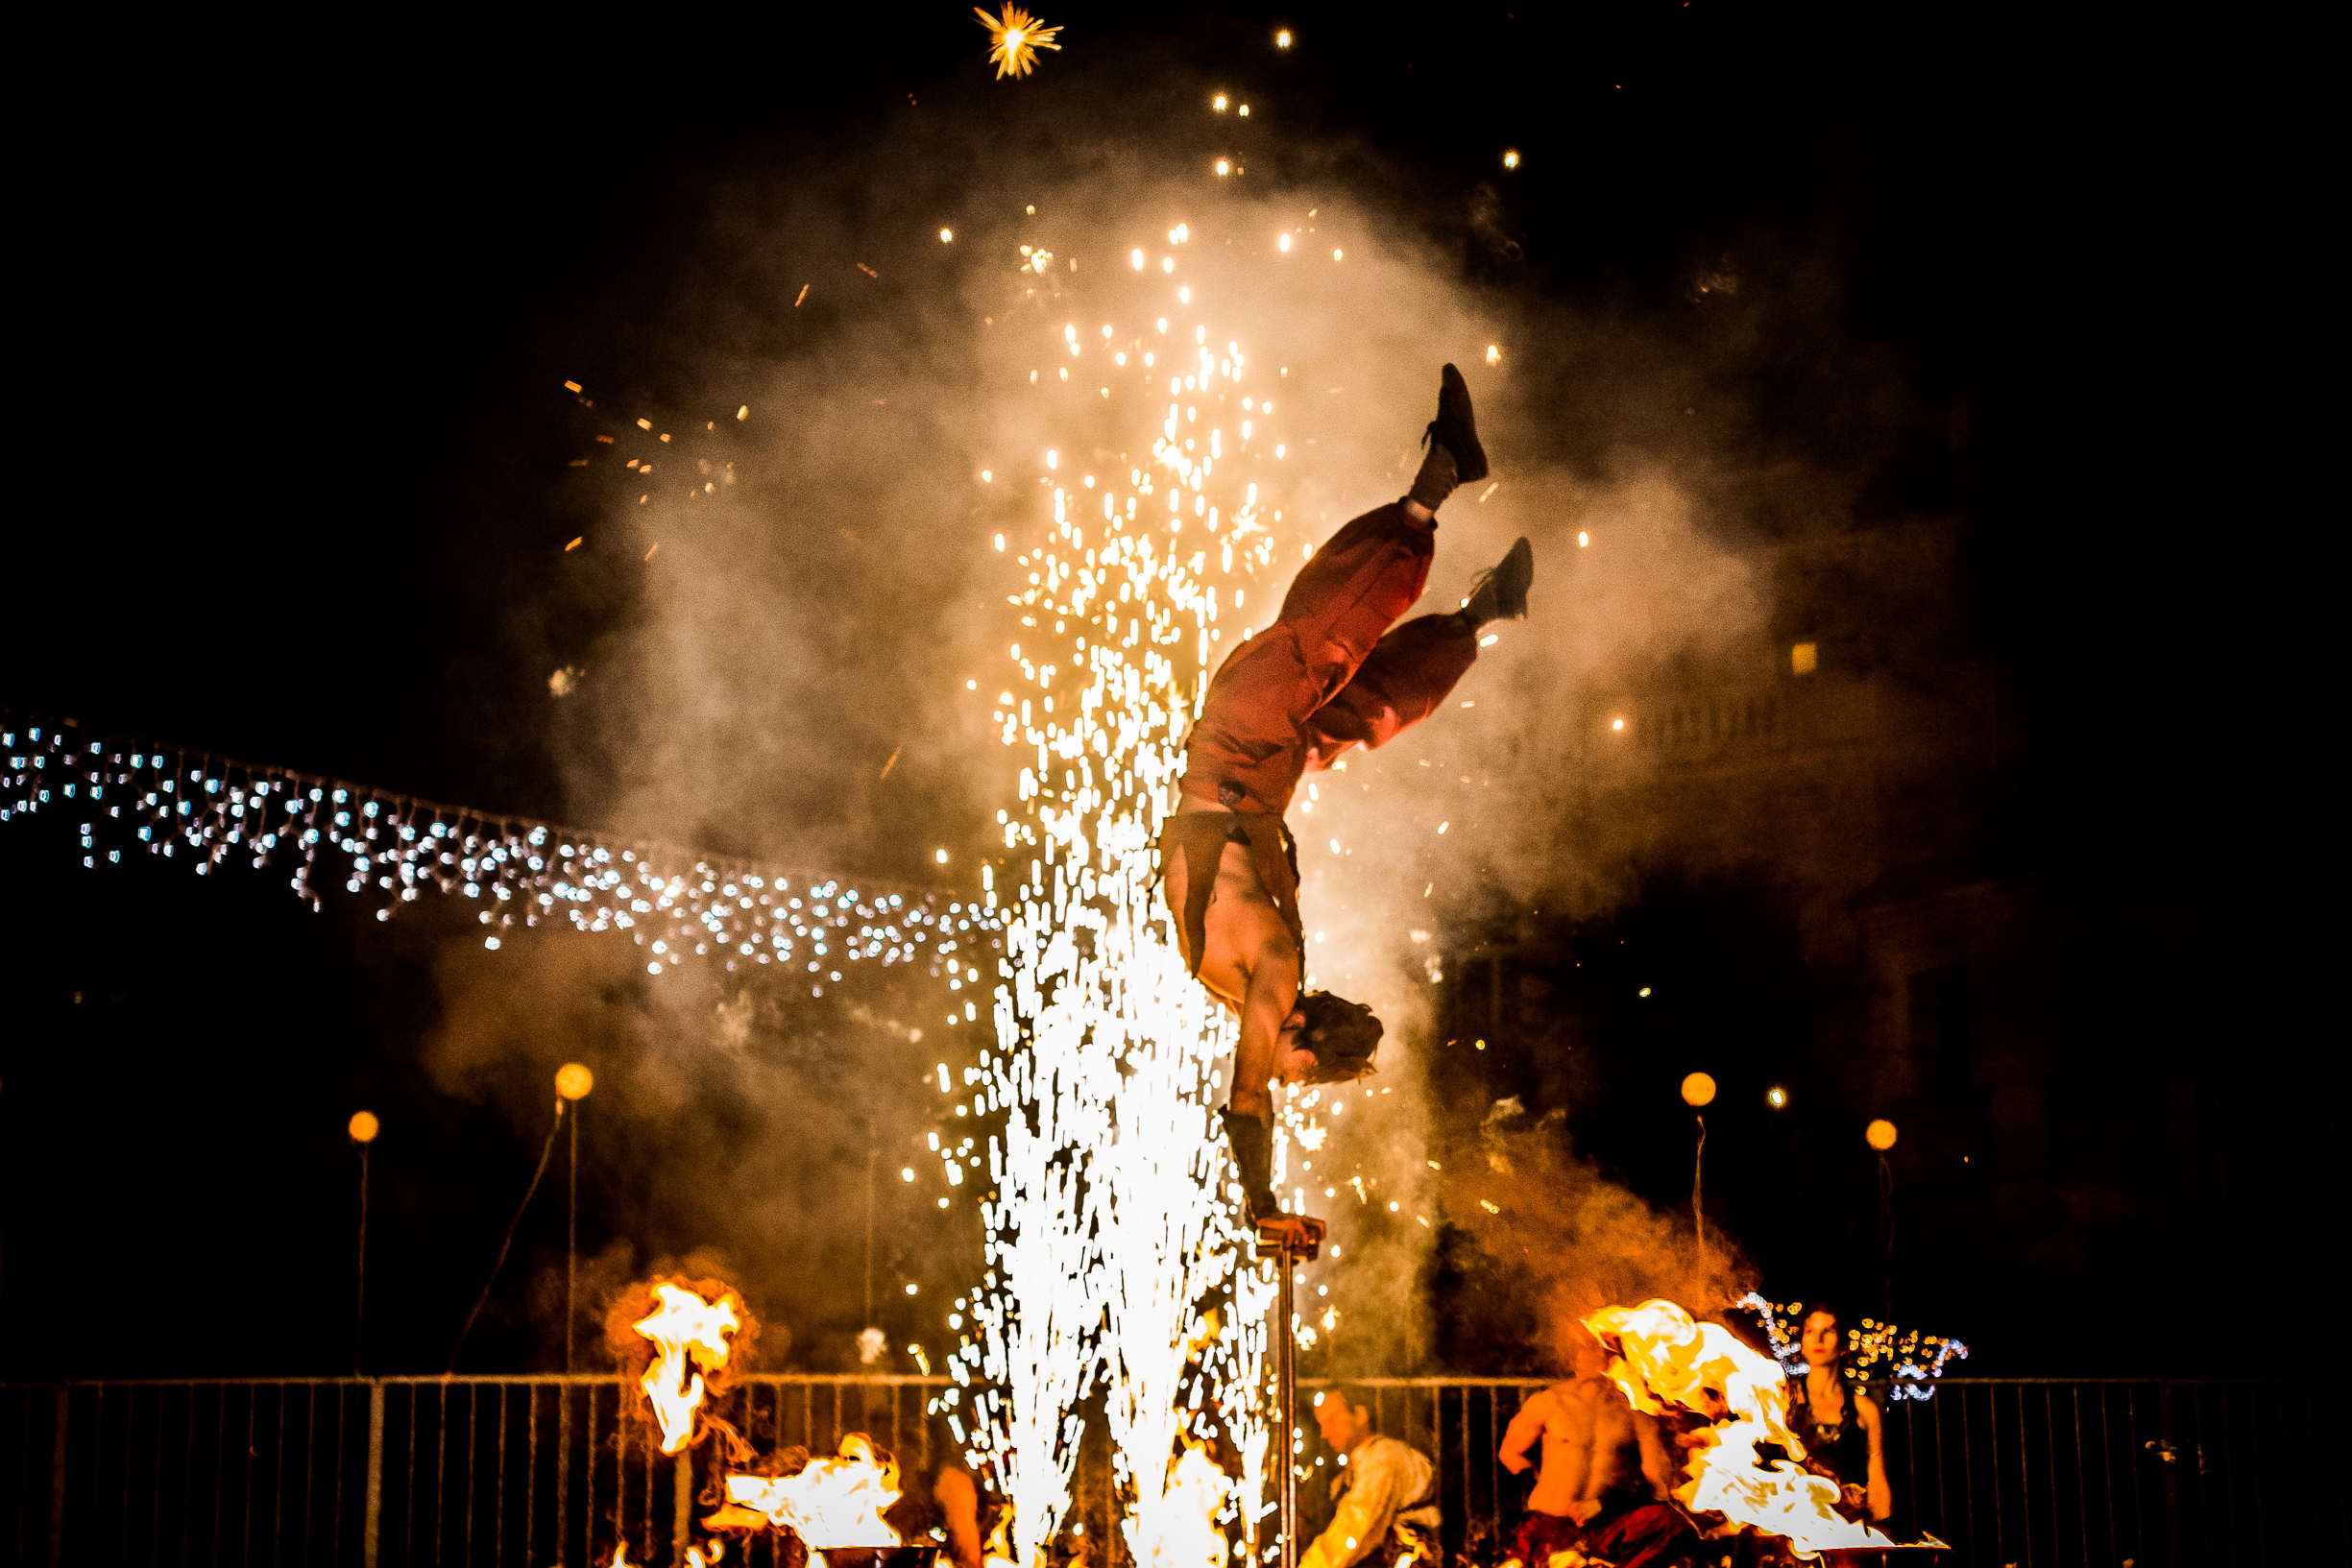 Spectacle de feu et pyrotechnie en acrobatie Cirque Indigo PACA